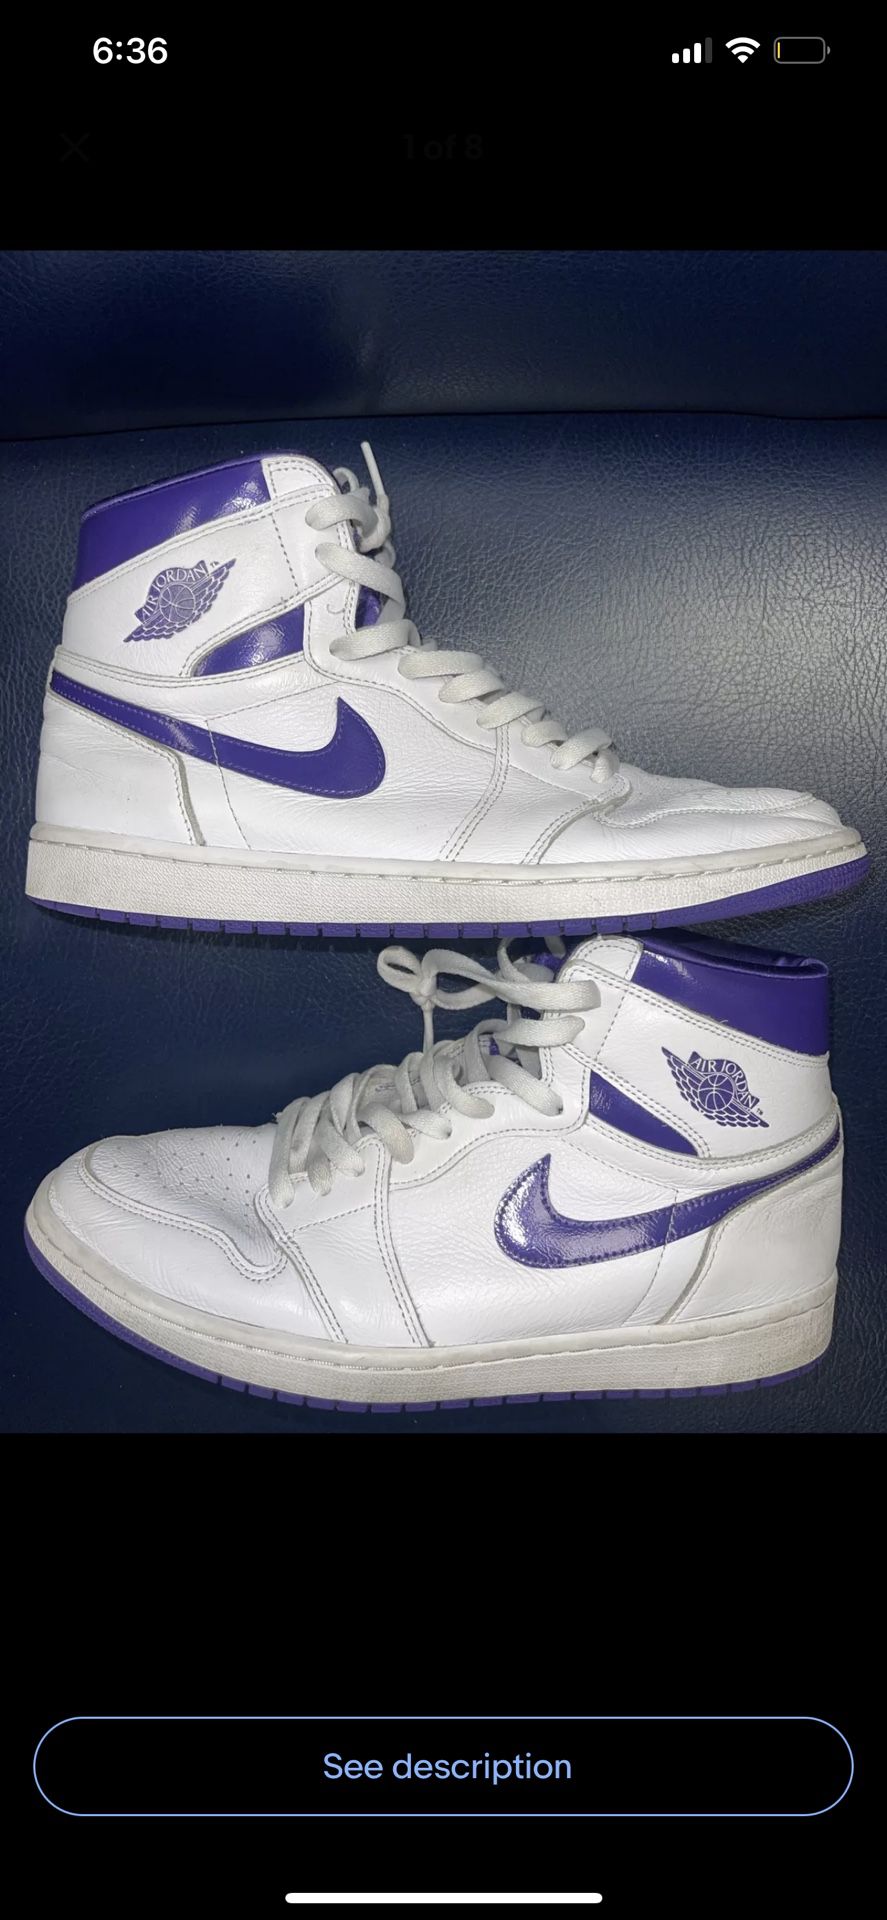 Size 12 - Air Jordan 1 OG High Court Purple W